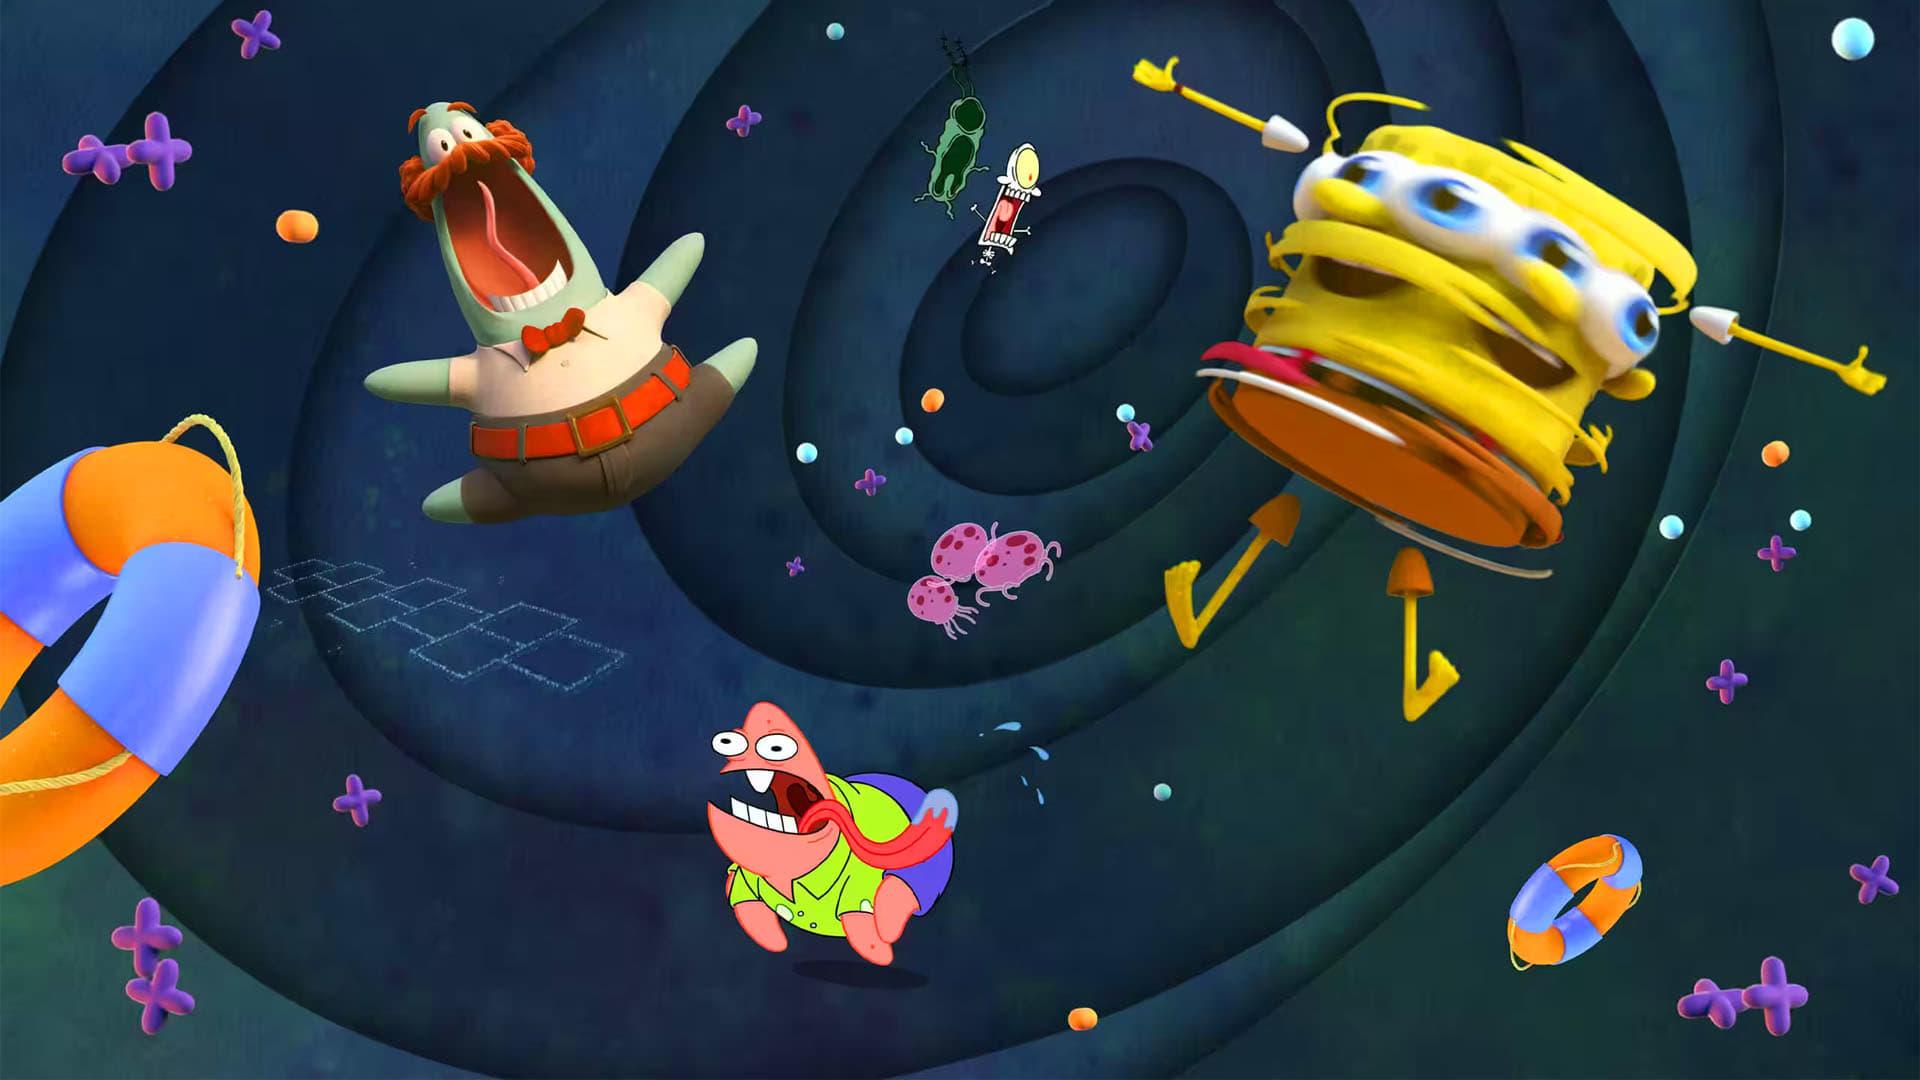 SpongeBob SquarePants Presents The Tidal Zone backdrop